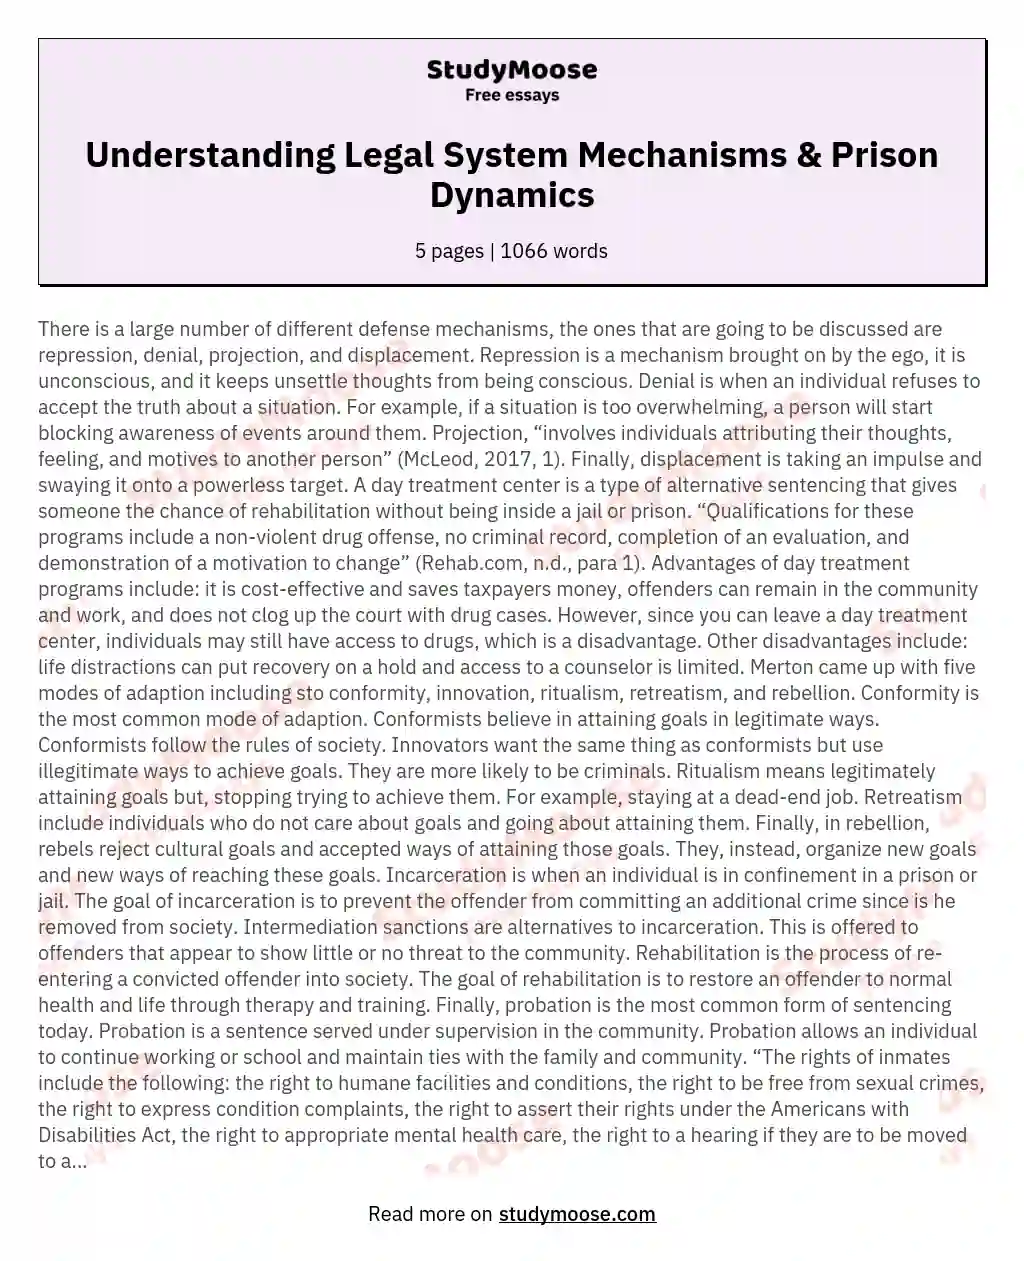 Understanding Legal System Mechanisms & Prison Dynamics essay